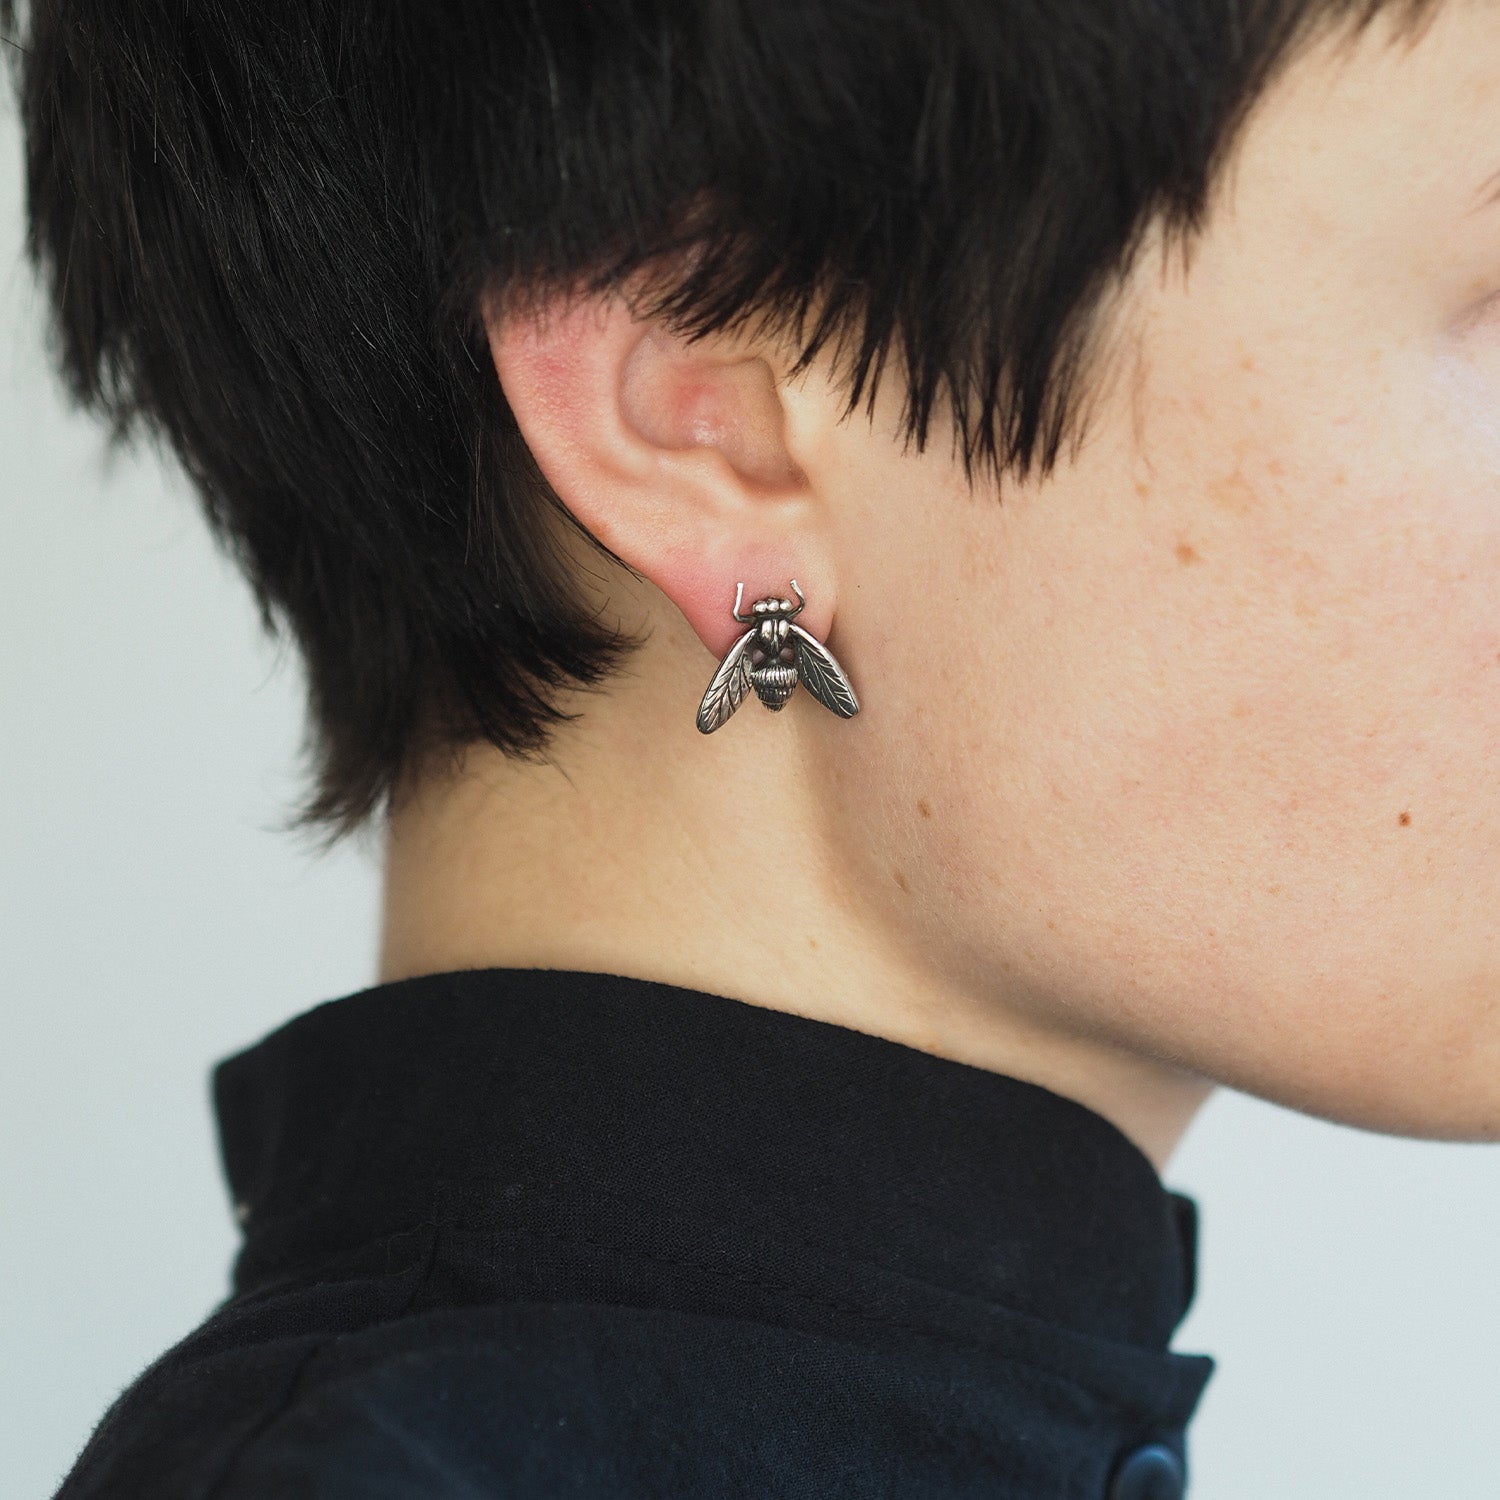 Hoverfly Stud Earrings by Yasmin Everley